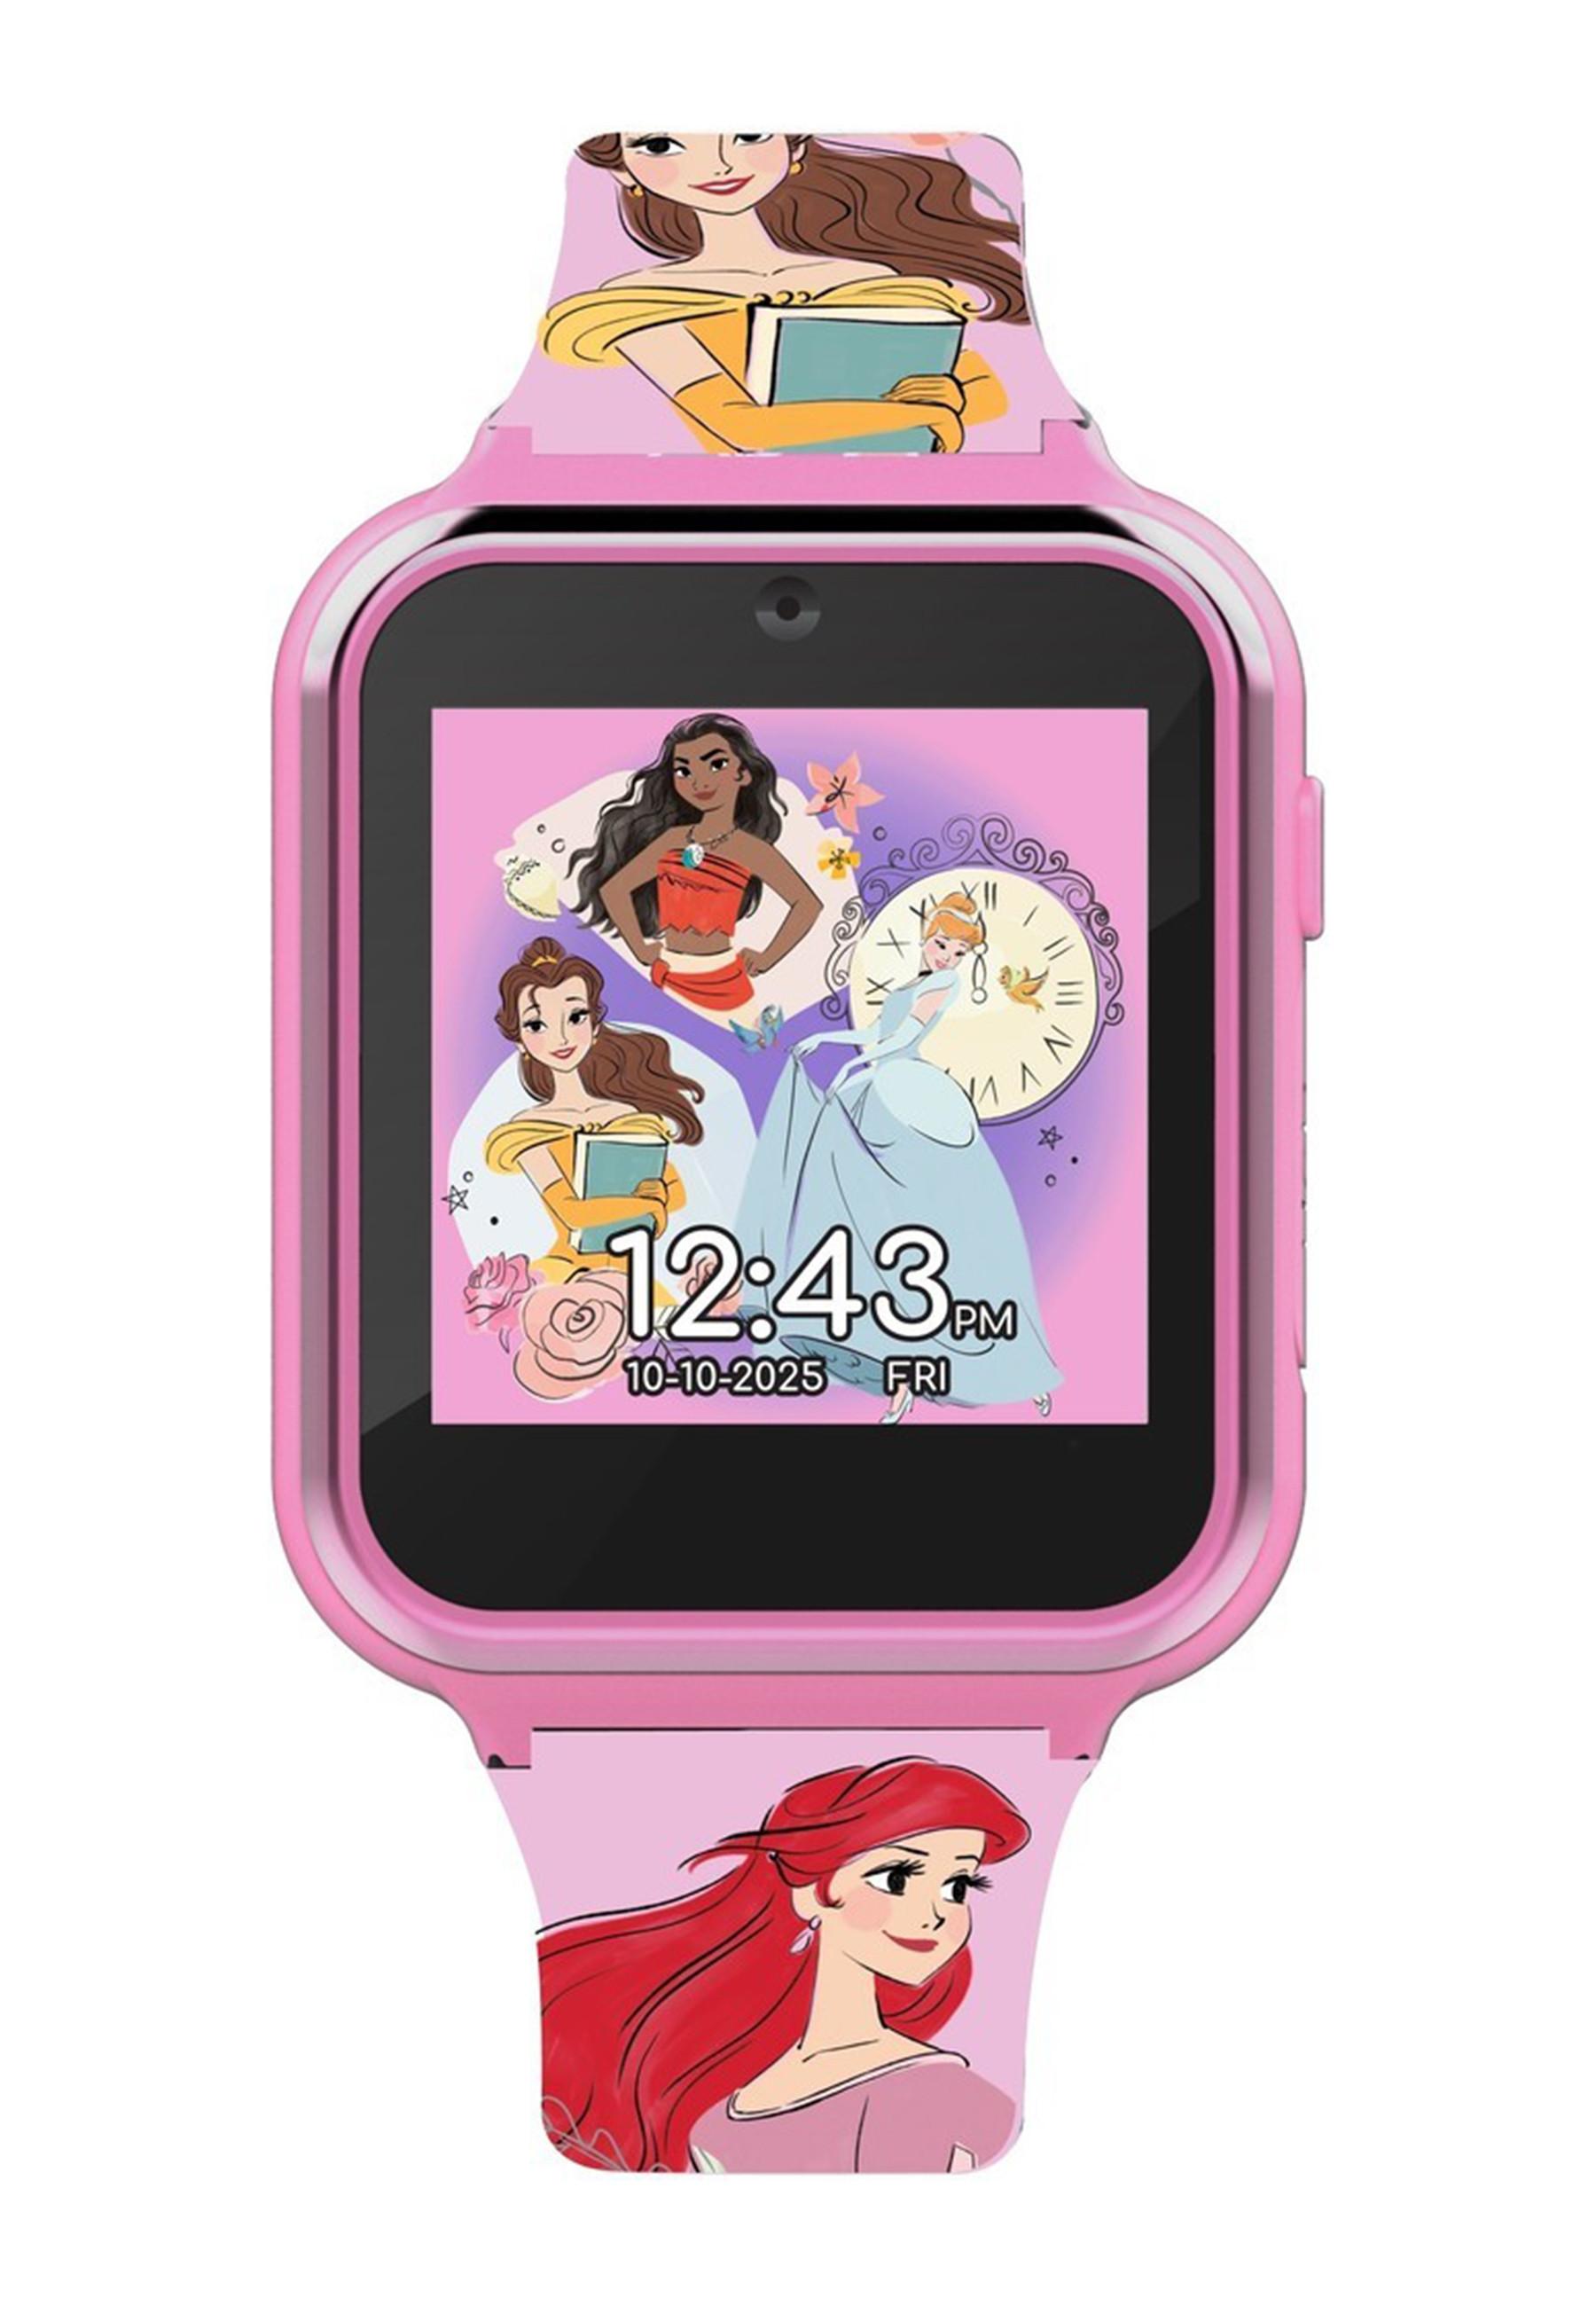 Disney  Disney Princess Kids Smart Watch 